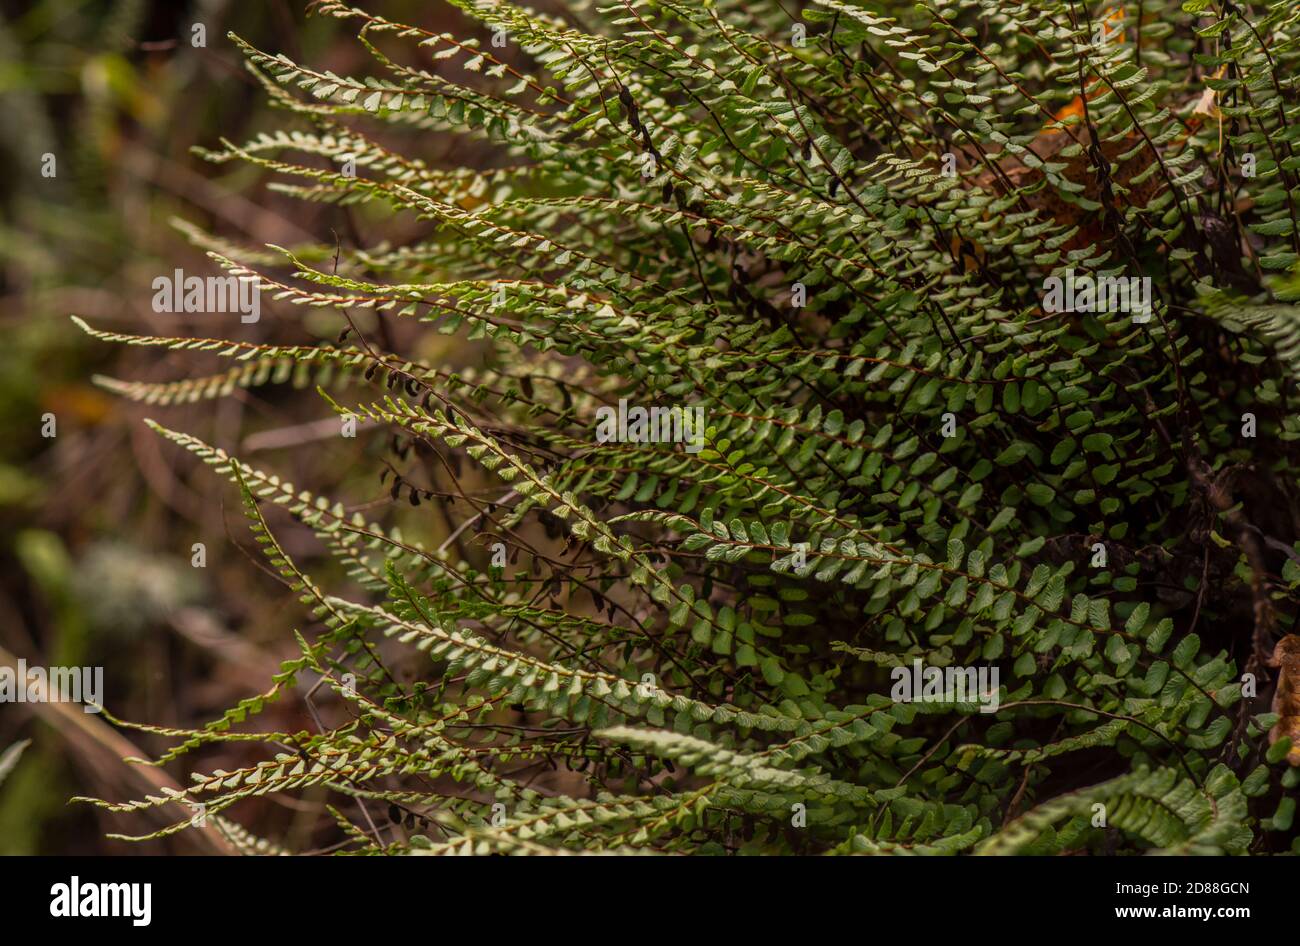 Ferns, maidenhair spleenwort, Asplenium trichomanes, growing in moist environment on rocks. Southern Spain. Stock Photo